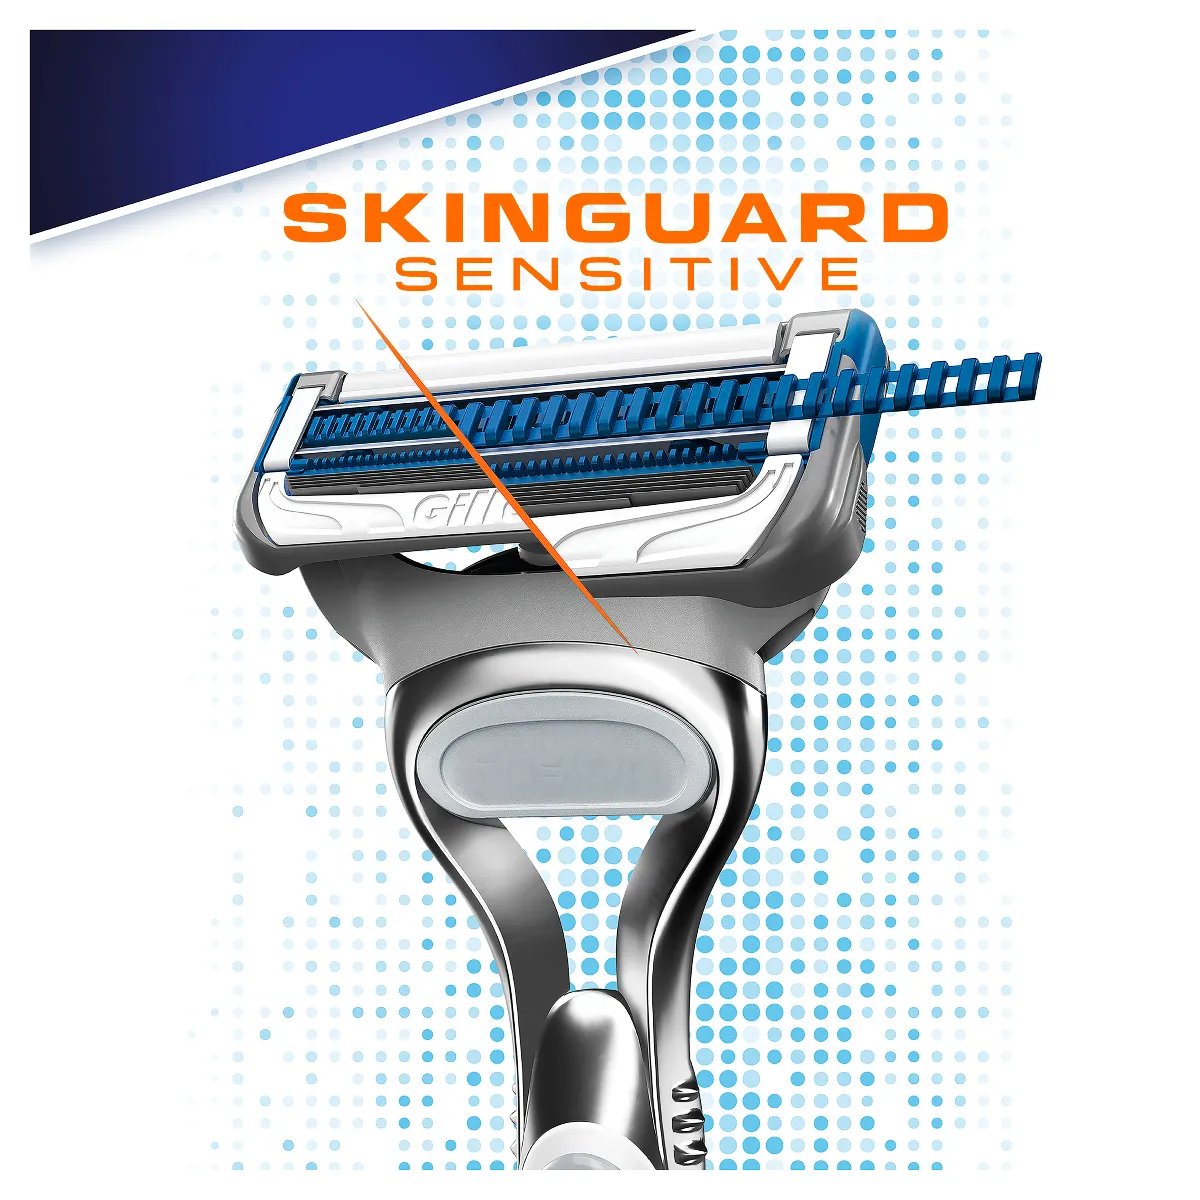 Gillette Skinguard Strojček + 2NH 1×2